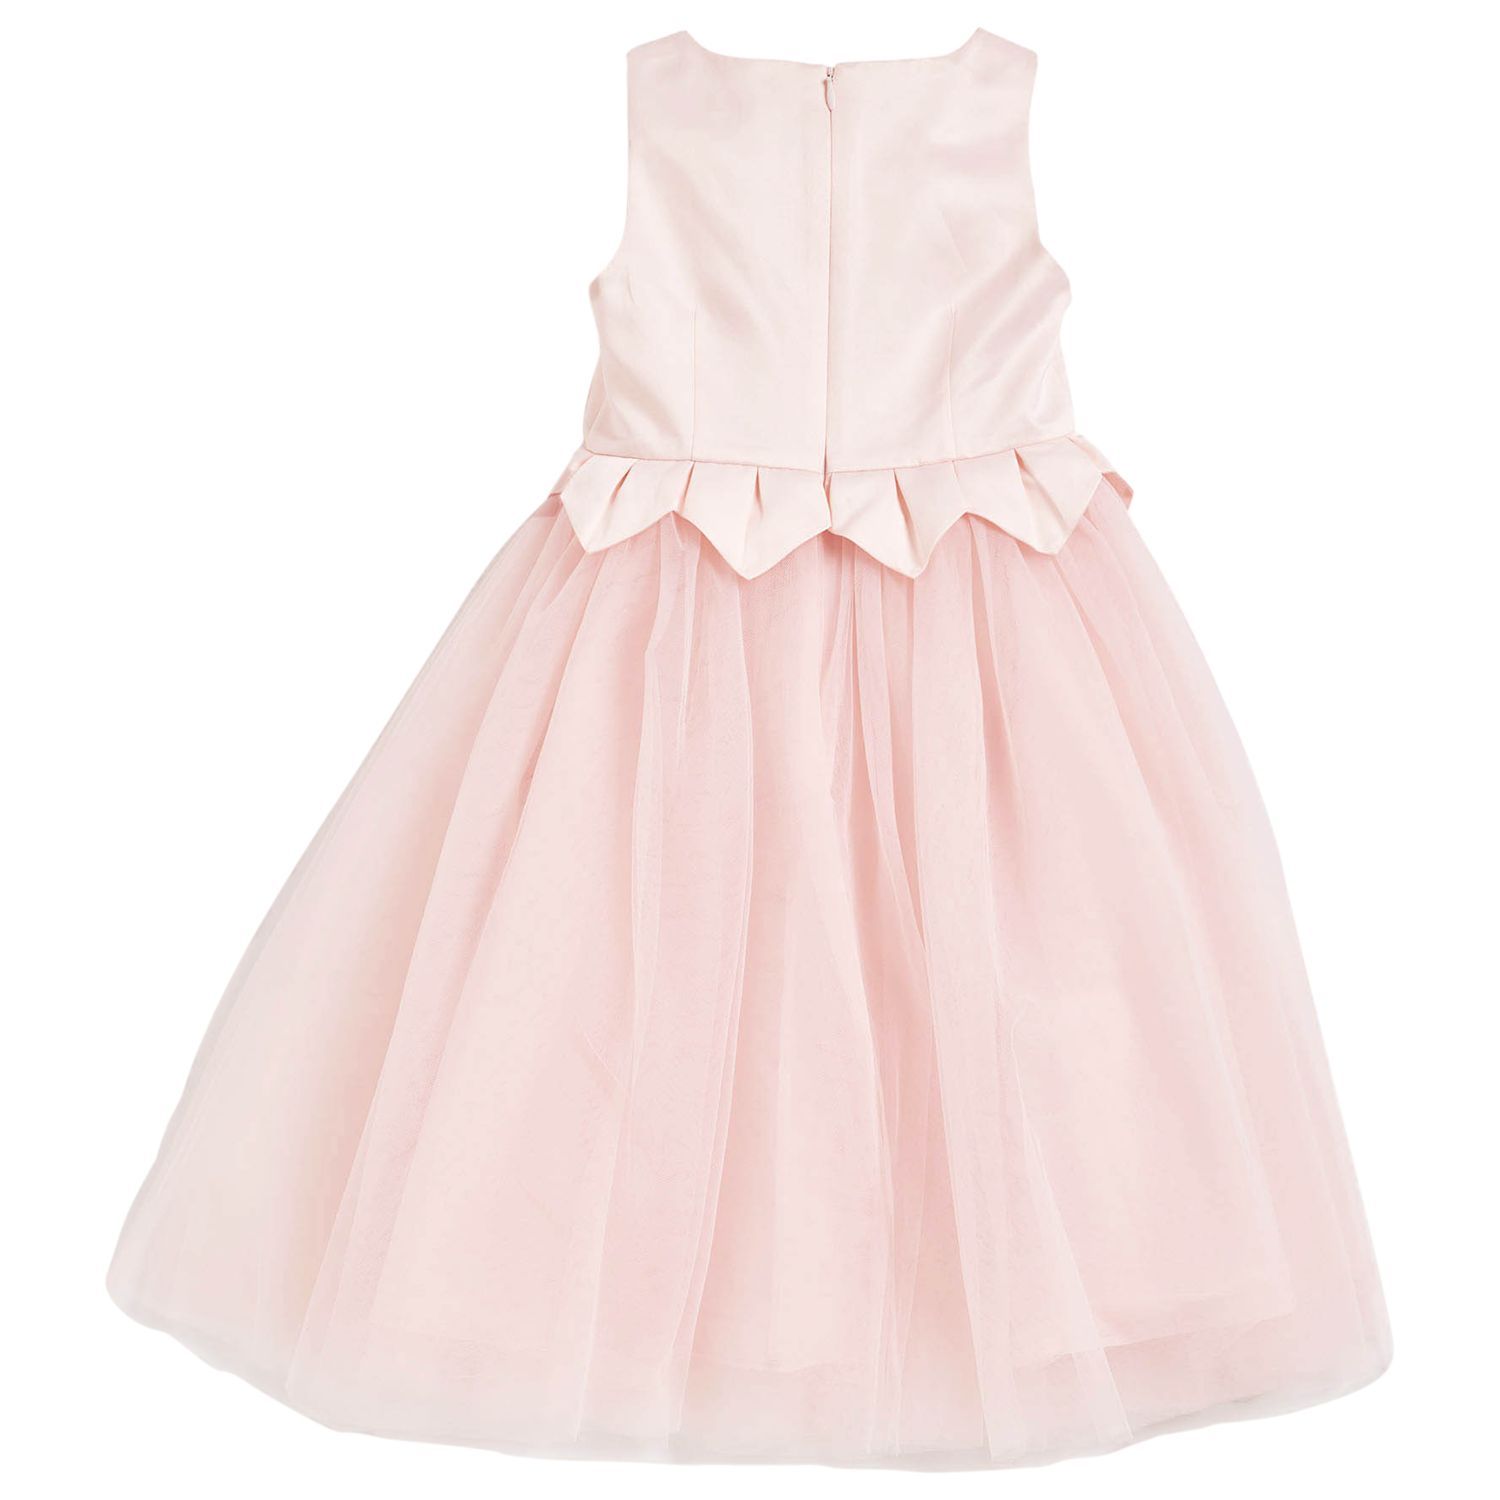 Angel & Rocket Girls' Tulle Skirt Dress, Pink, 4 years